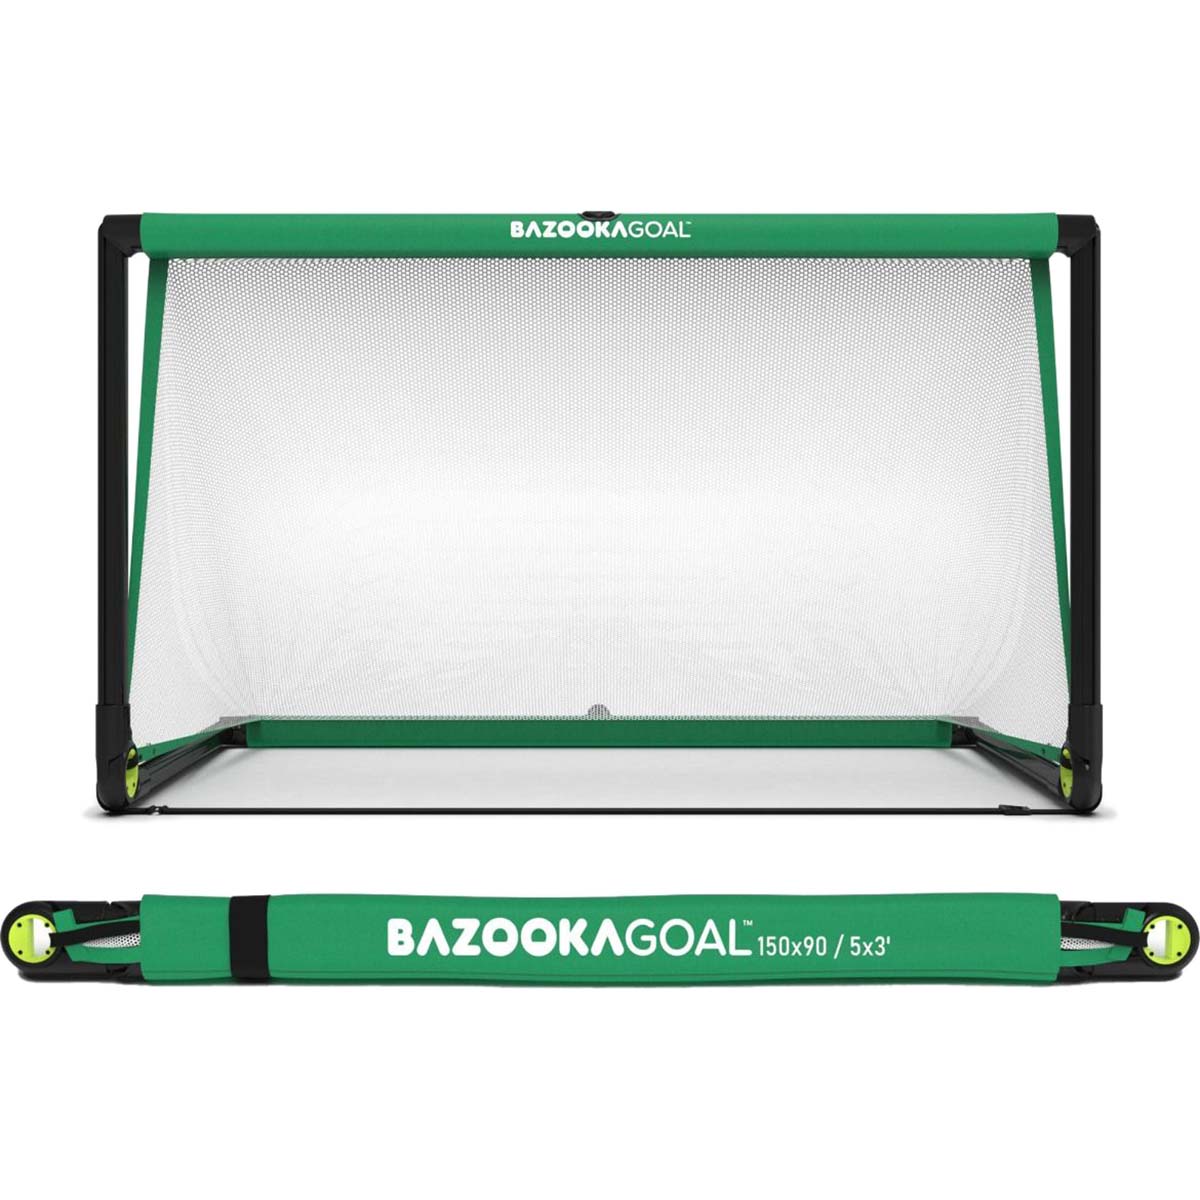 BazookaGoal Original 150x90cm - Black/Green